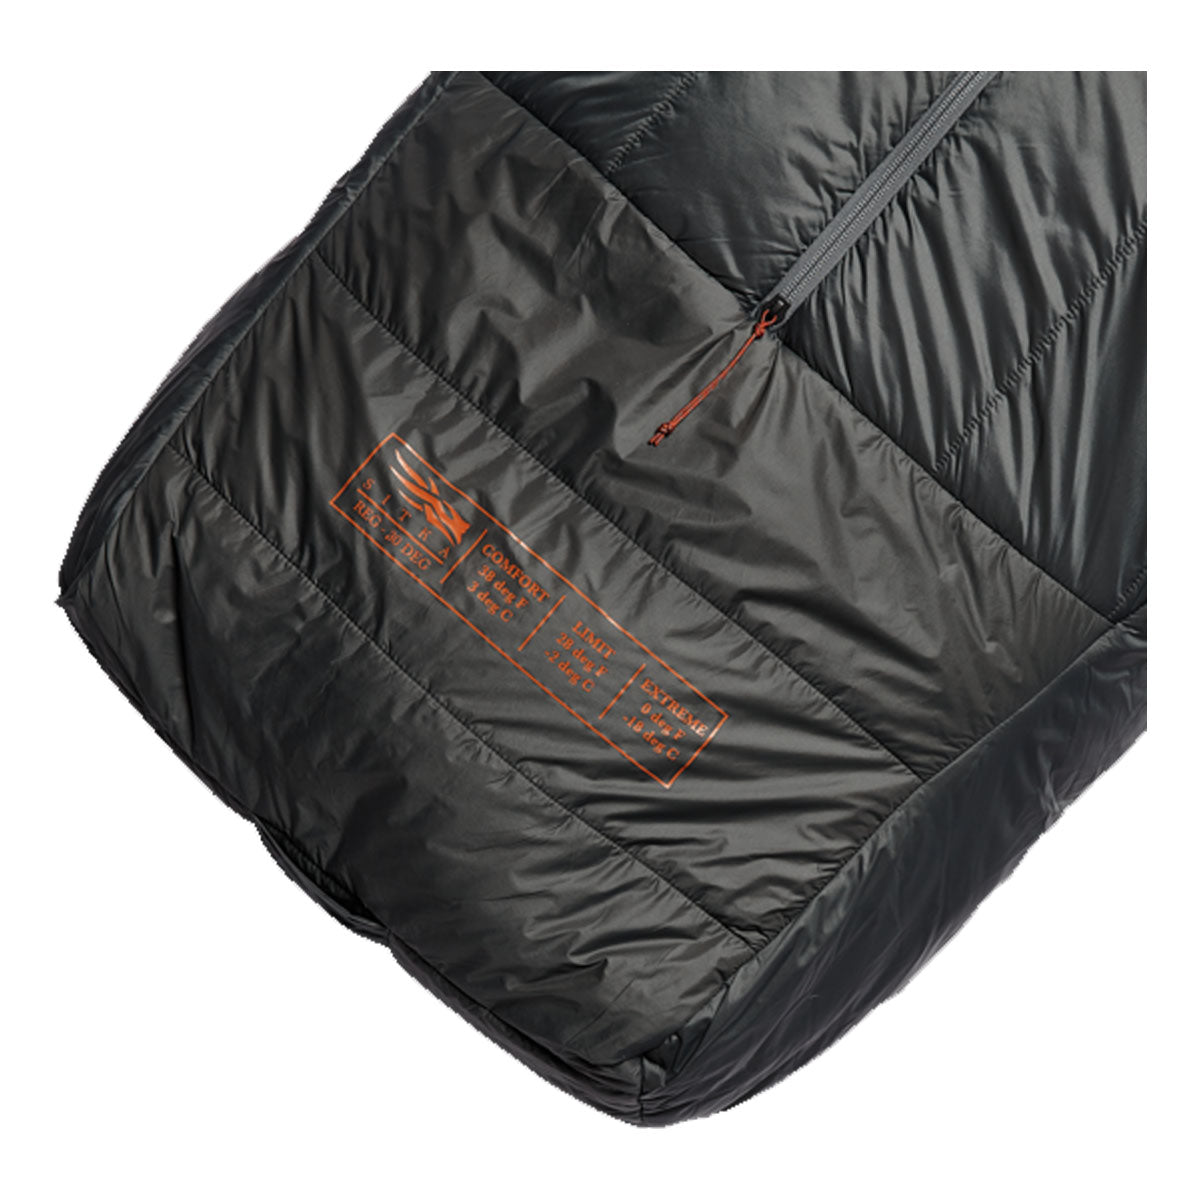 Sitka Kelvin AeroLite 30 Sleeping Bag